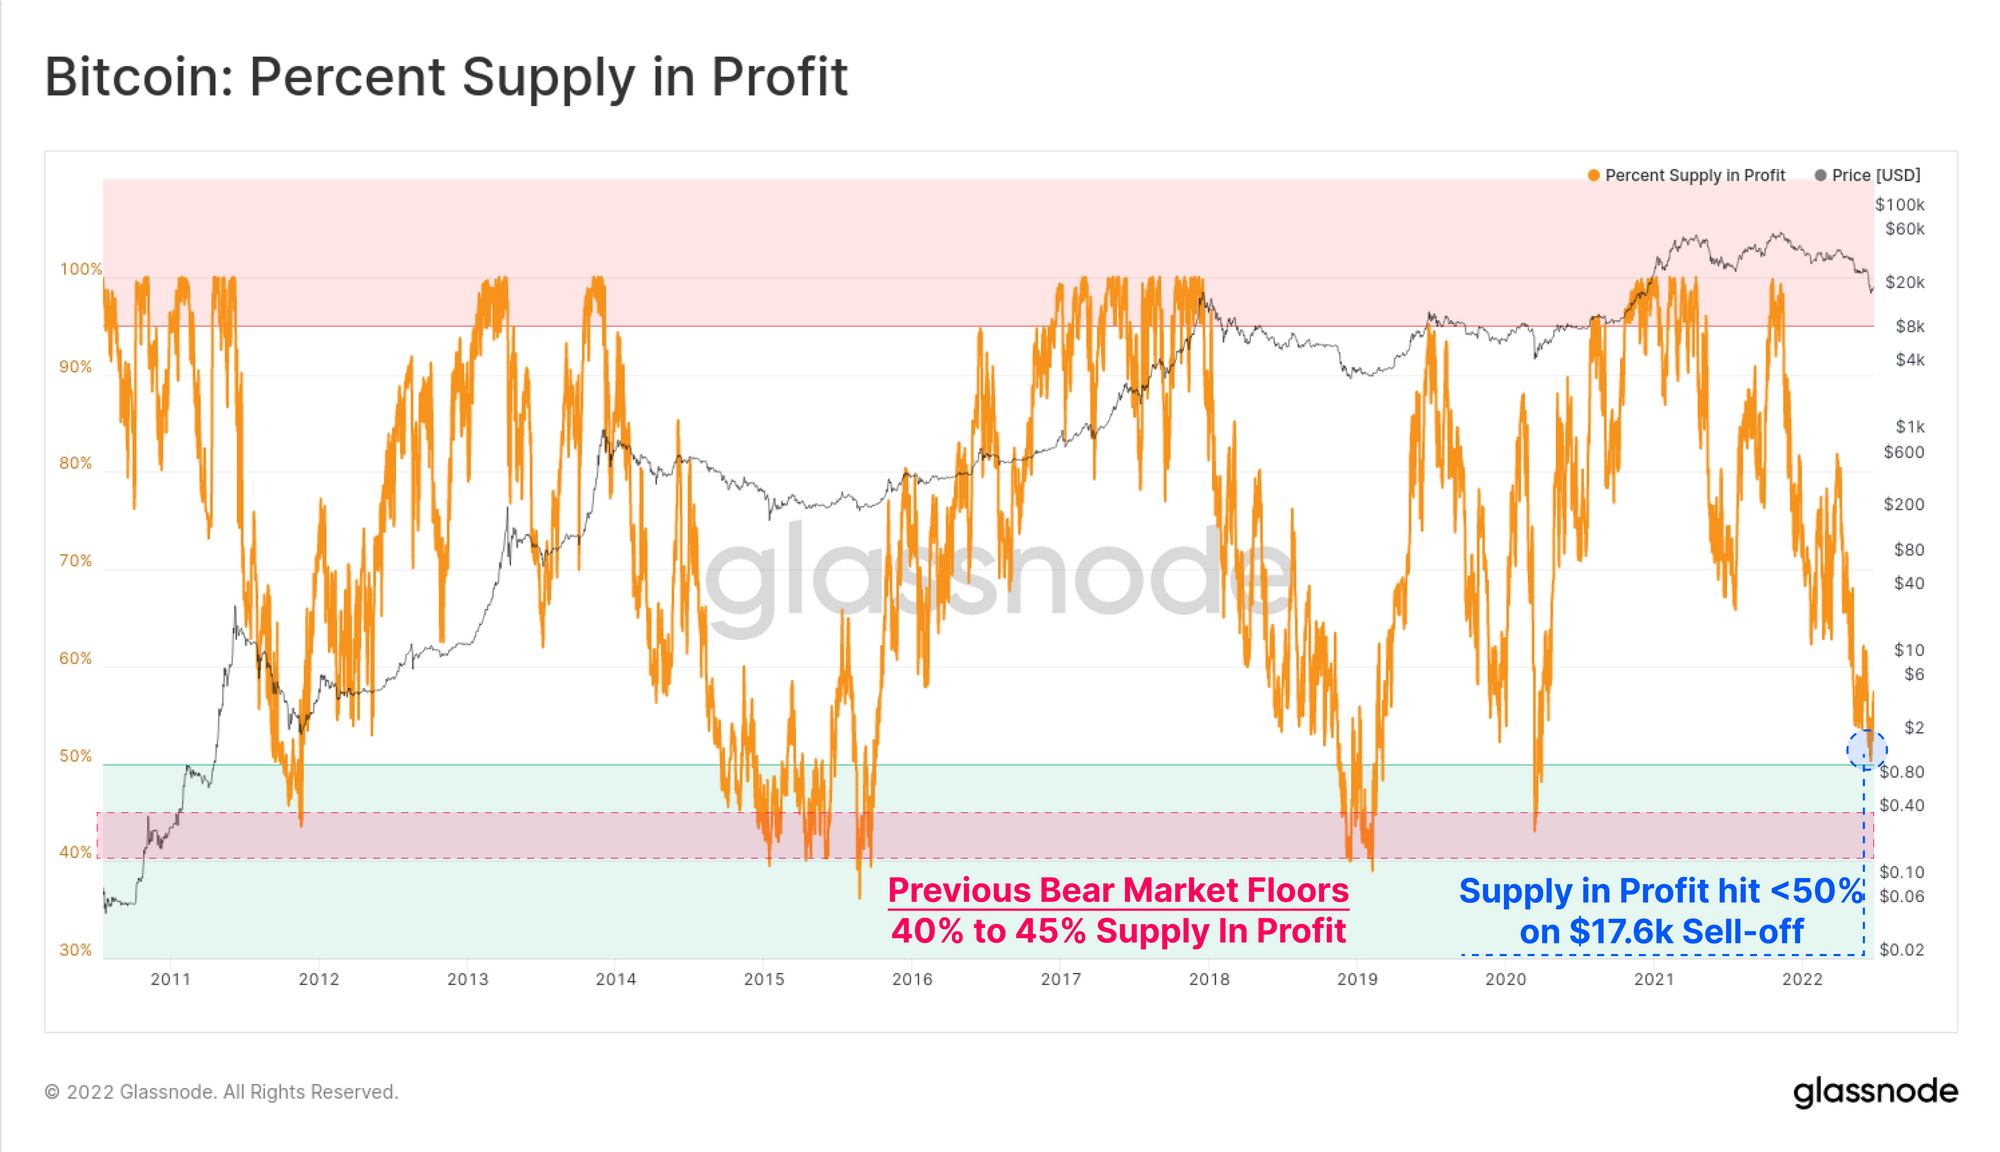 Bitcoin: Percent Supply in Profit